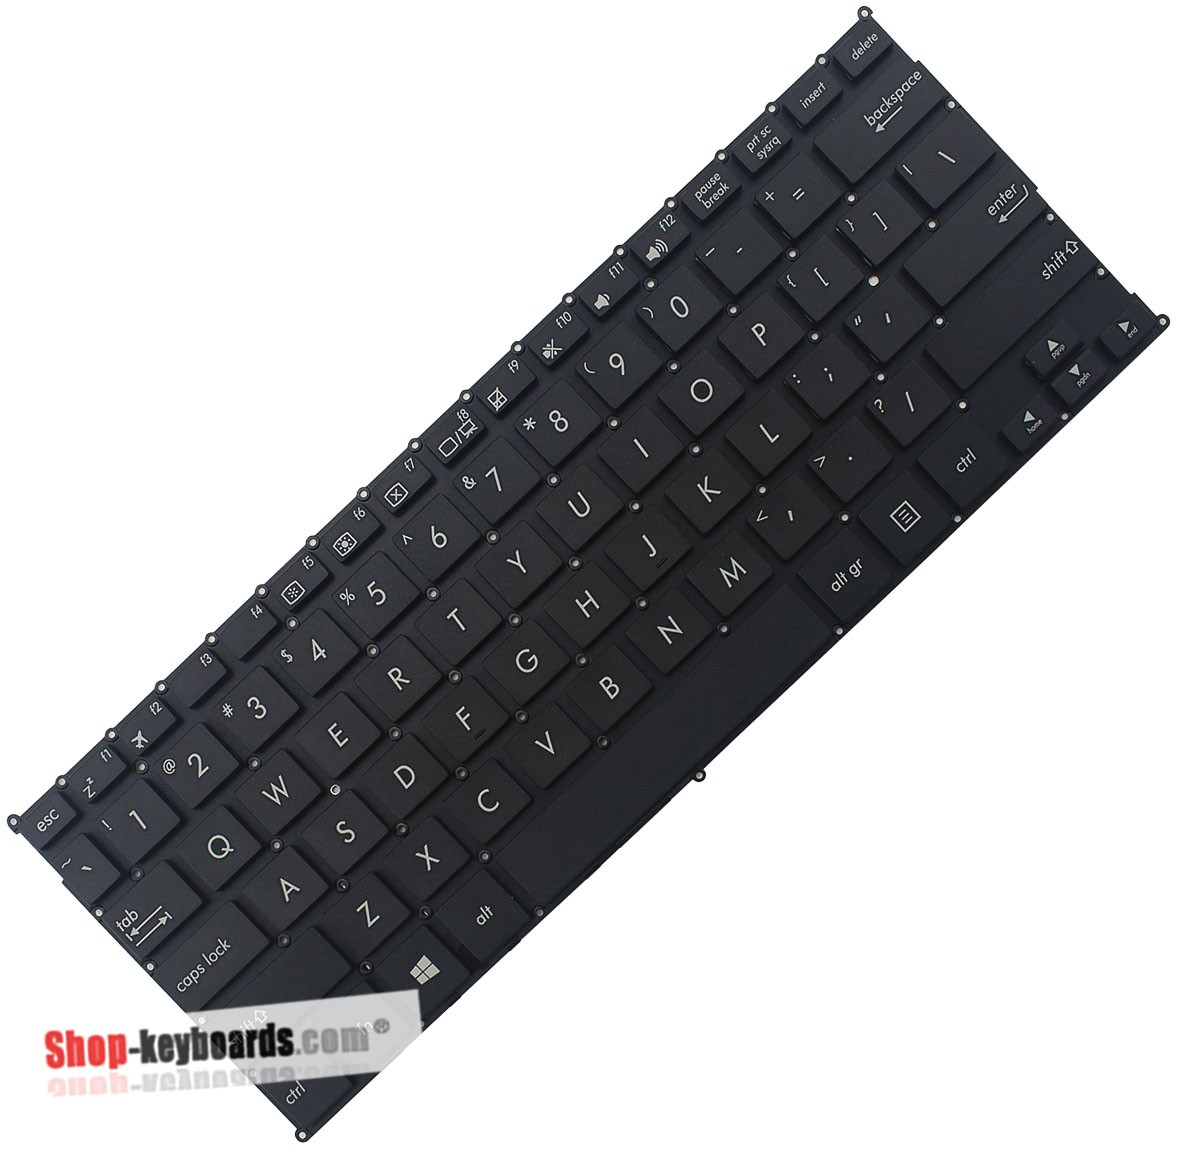 Asus 0KNB0-1120LA00 Keyboard replacement